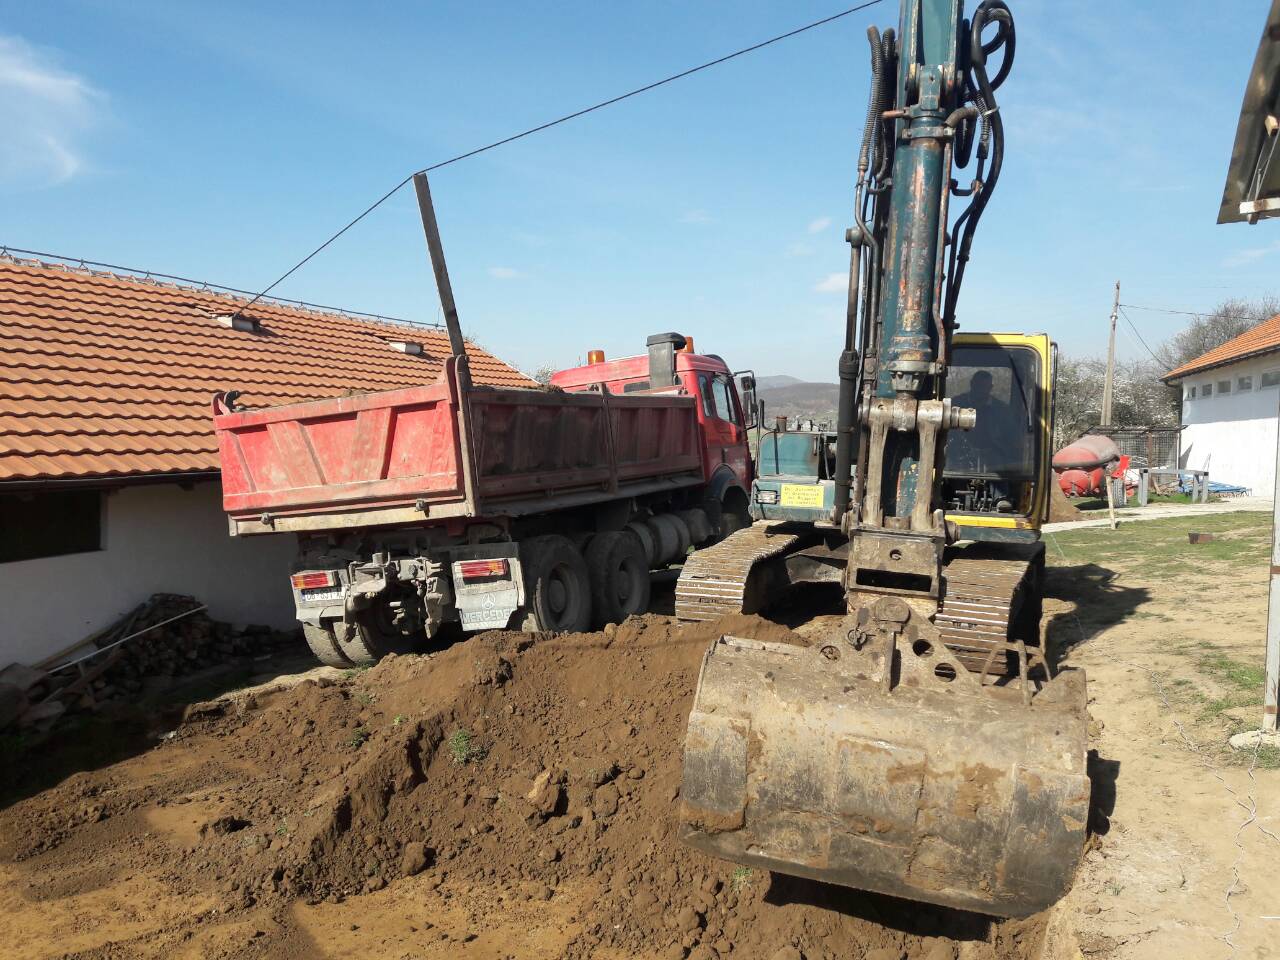 À Novo Brdo, deux chantiers simultanés